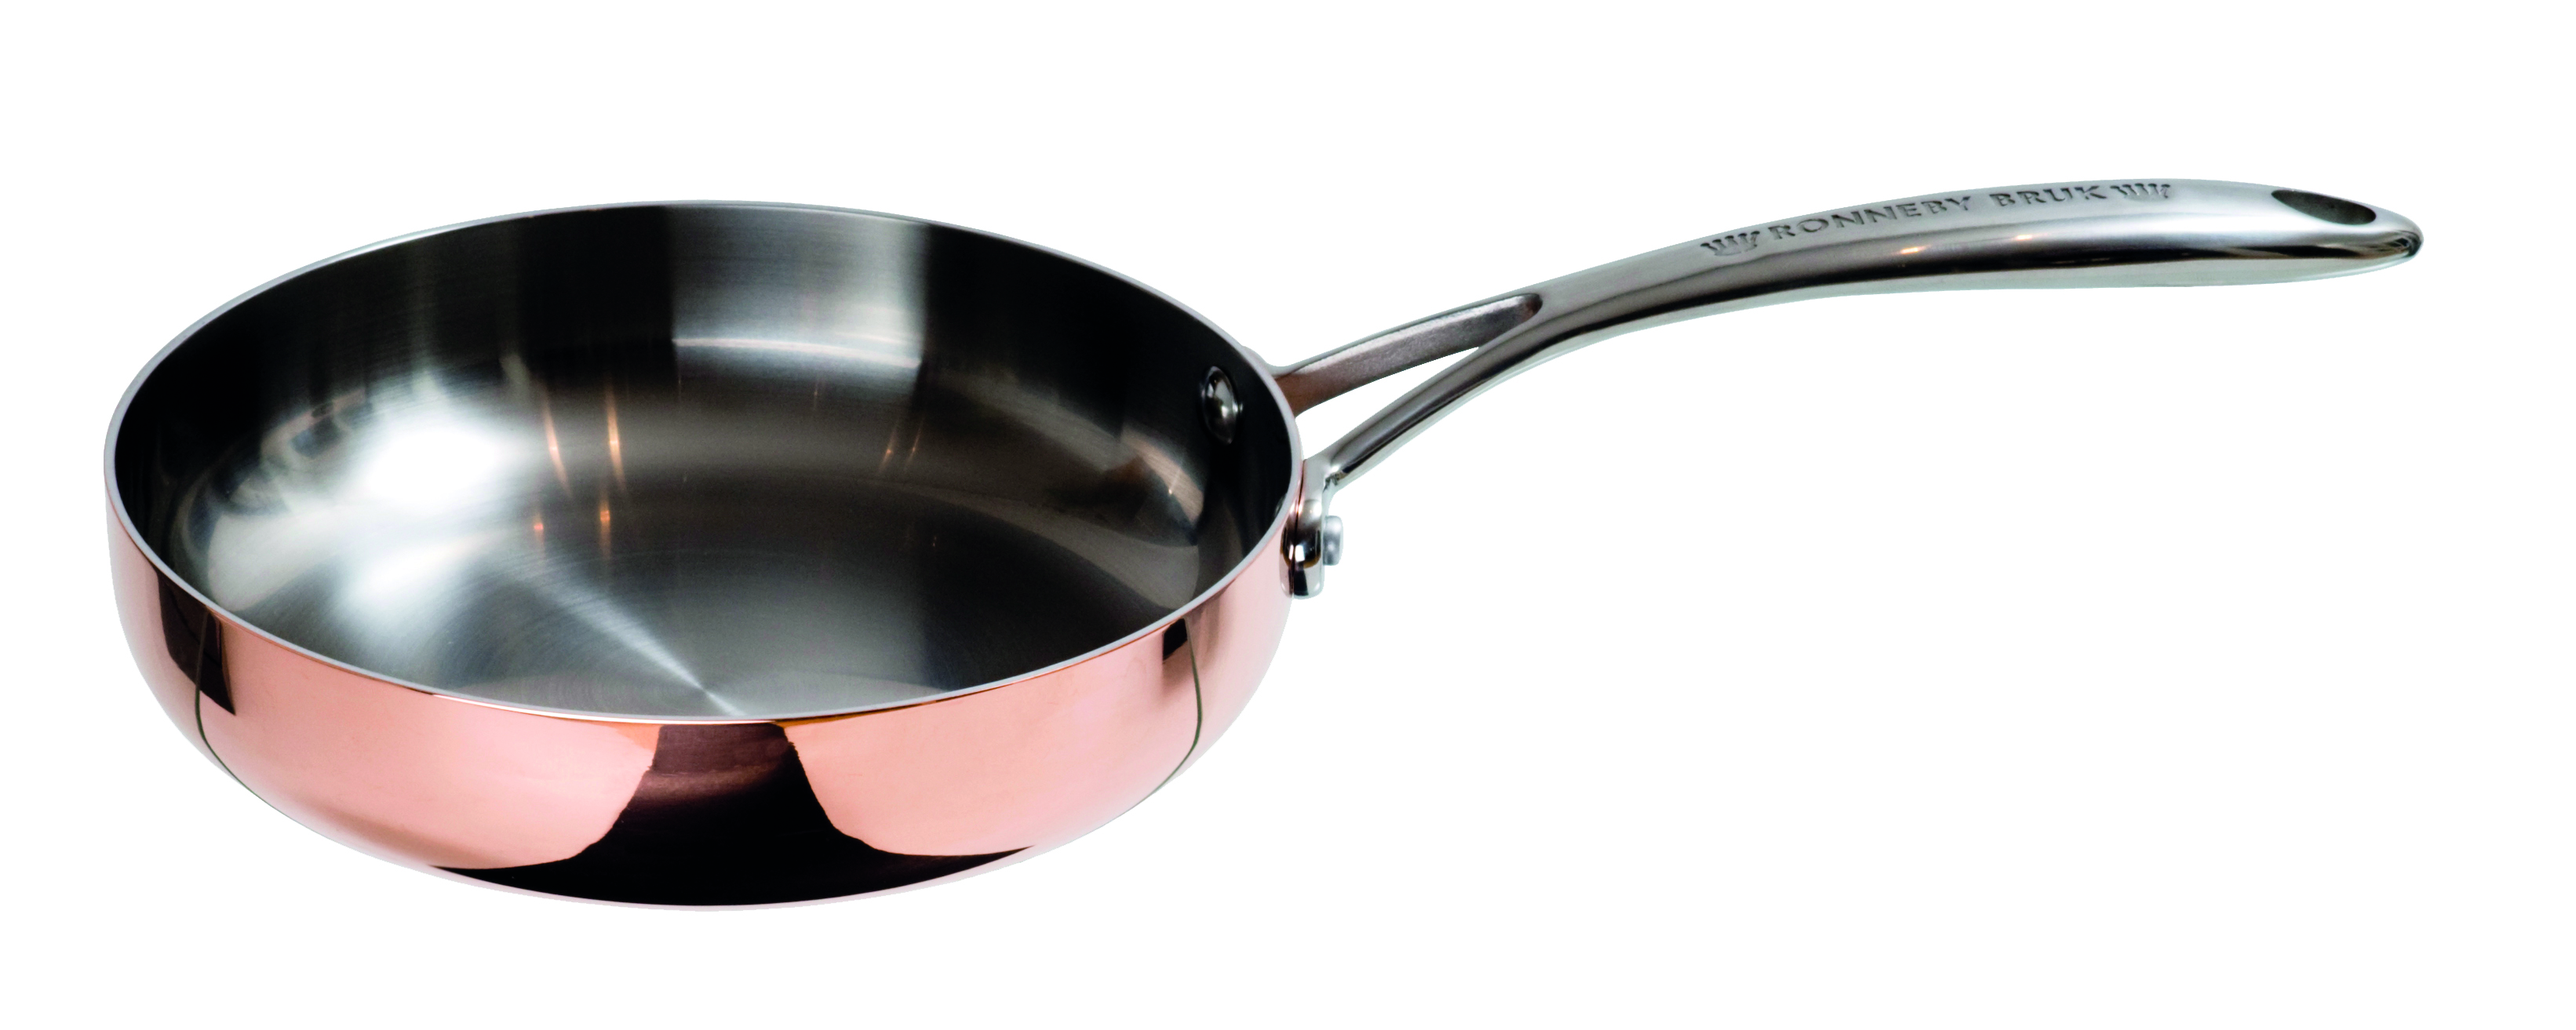 Maestro Copper Fry pan 20 cm